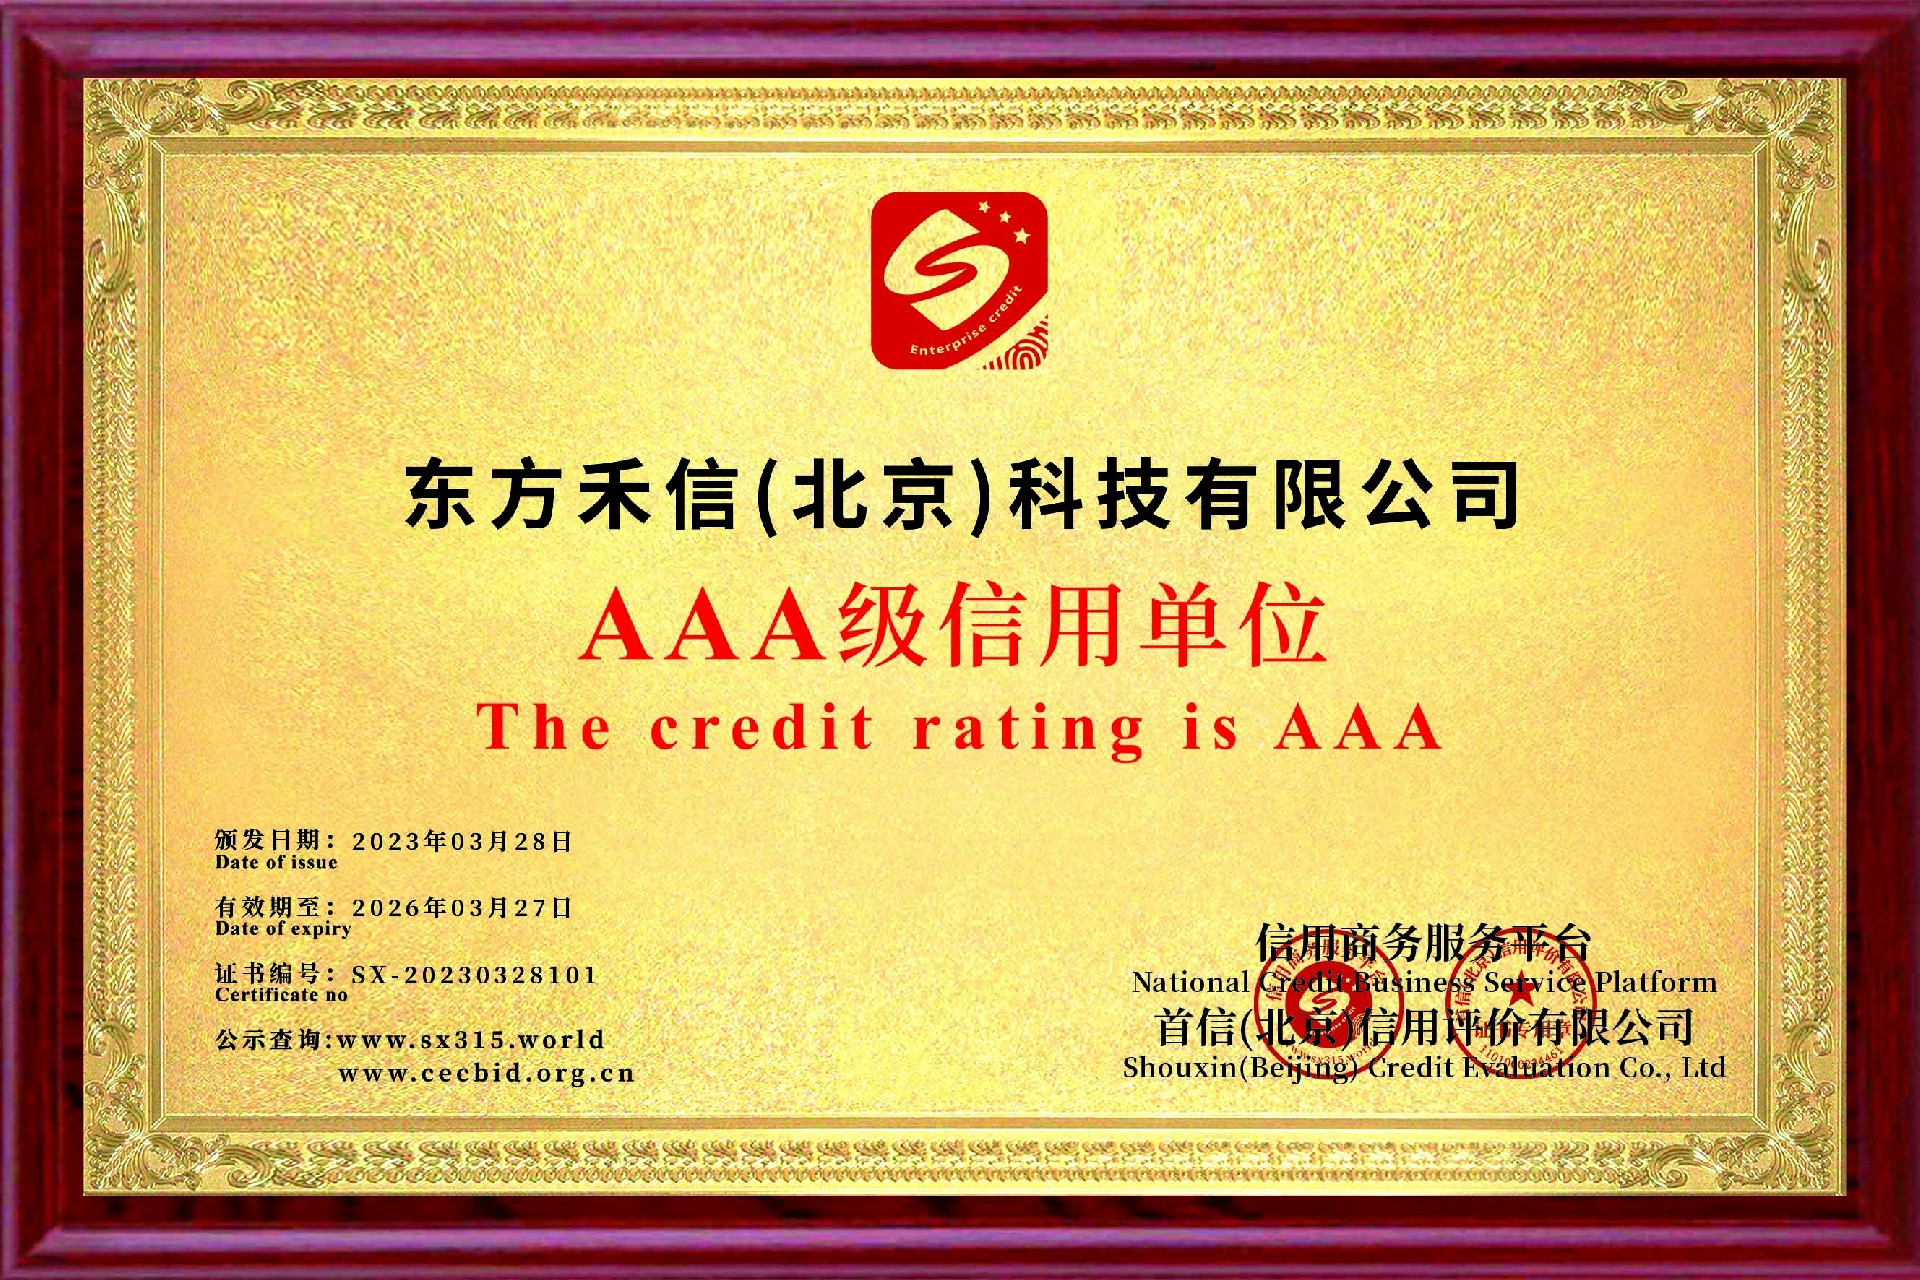 AAA企业信用评价铜牌